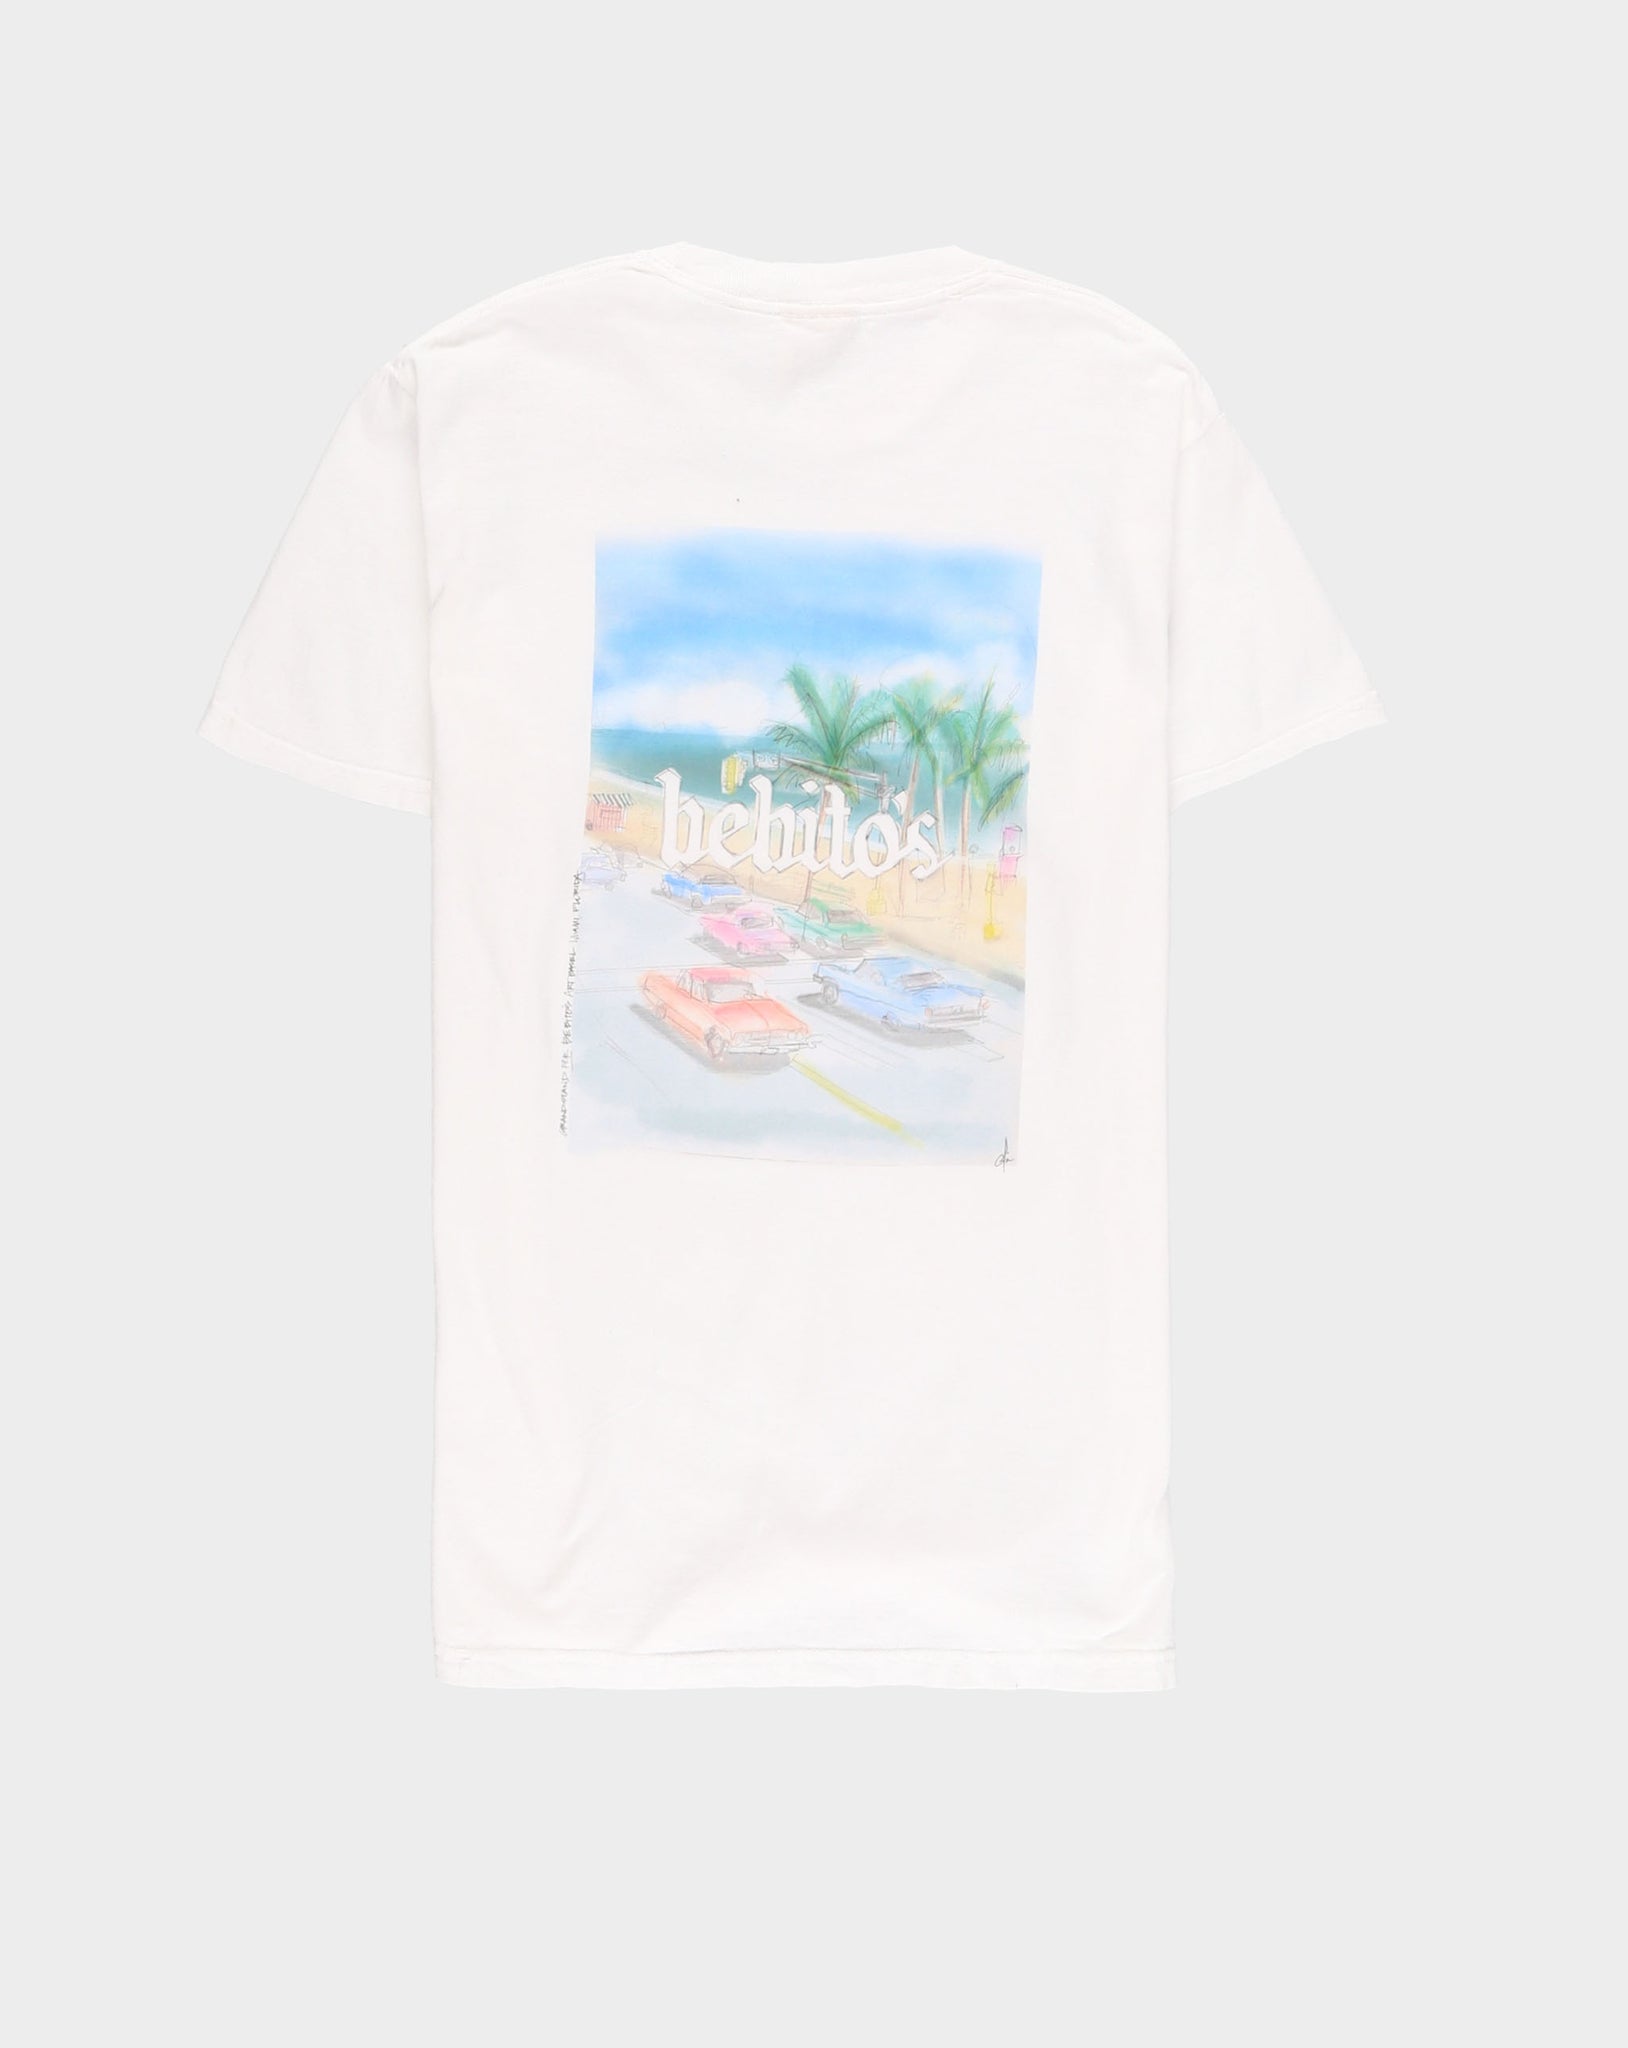 Contrast High x Grandstand 'Watercolor' T-Shirt